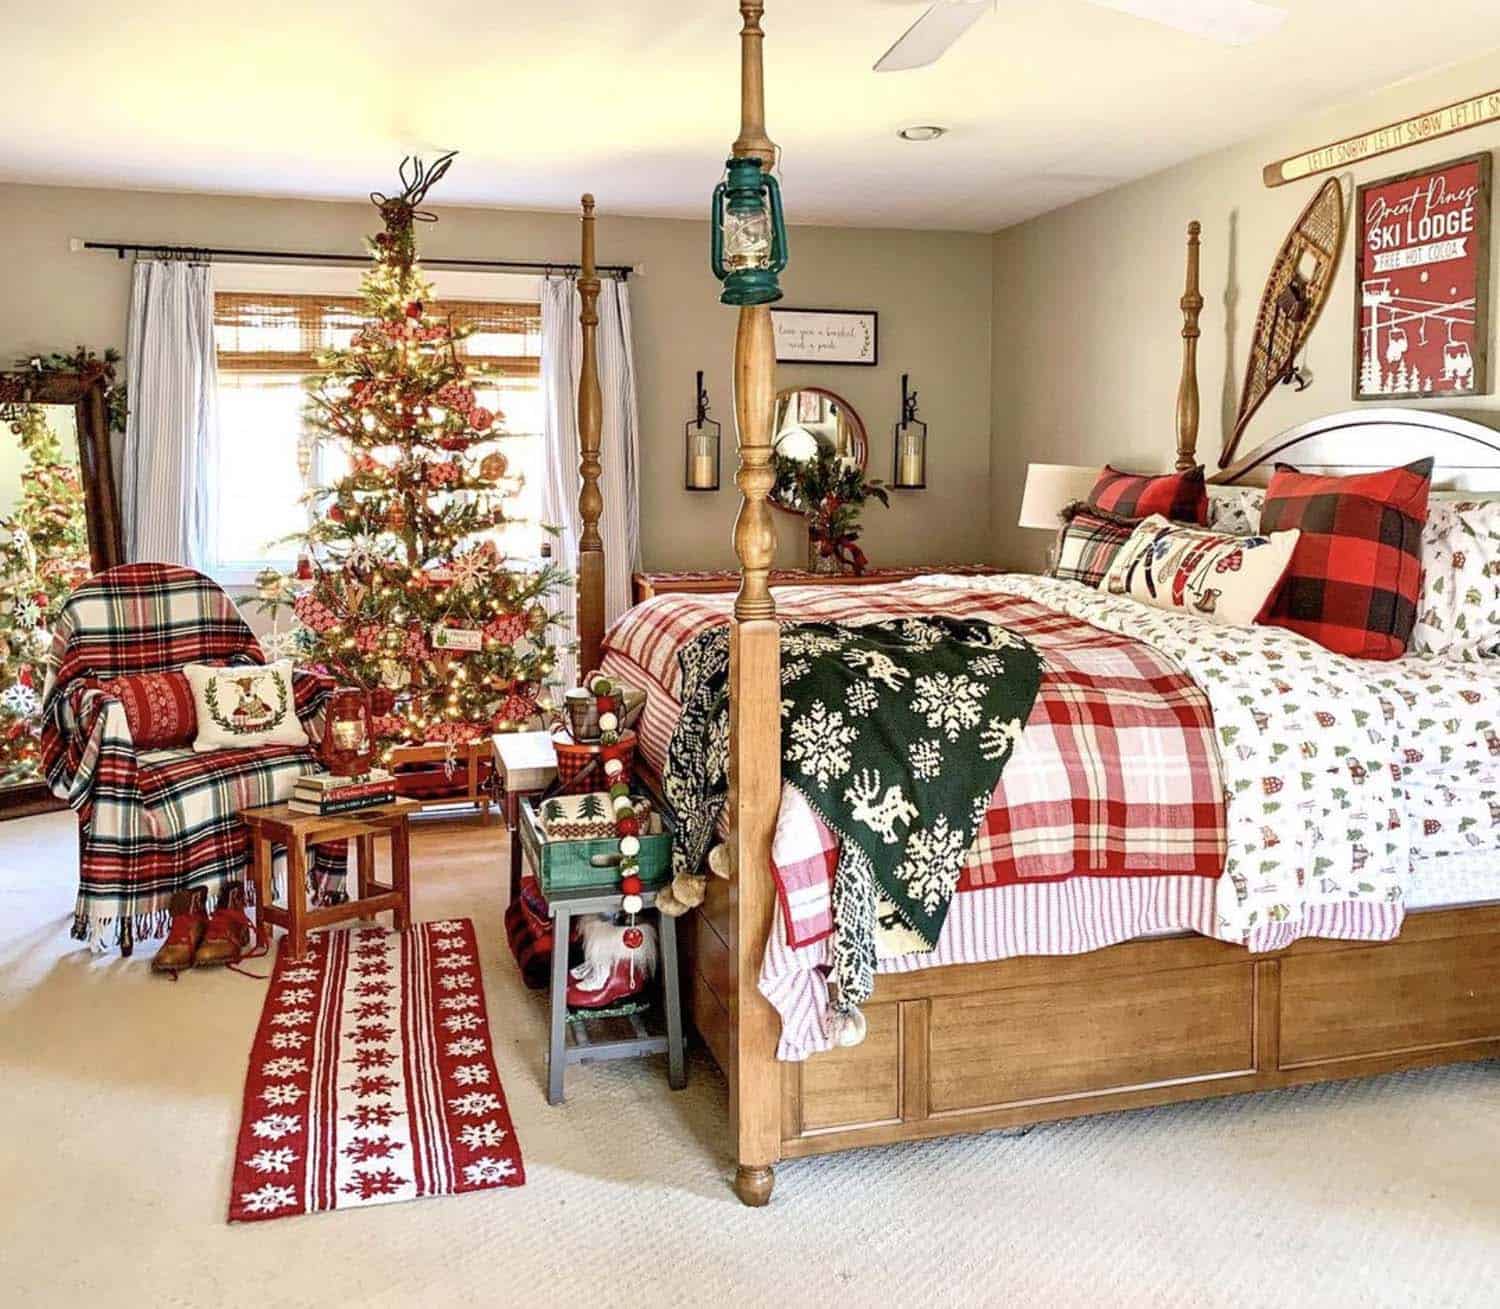 ski lodge christmas decor in the bedroom